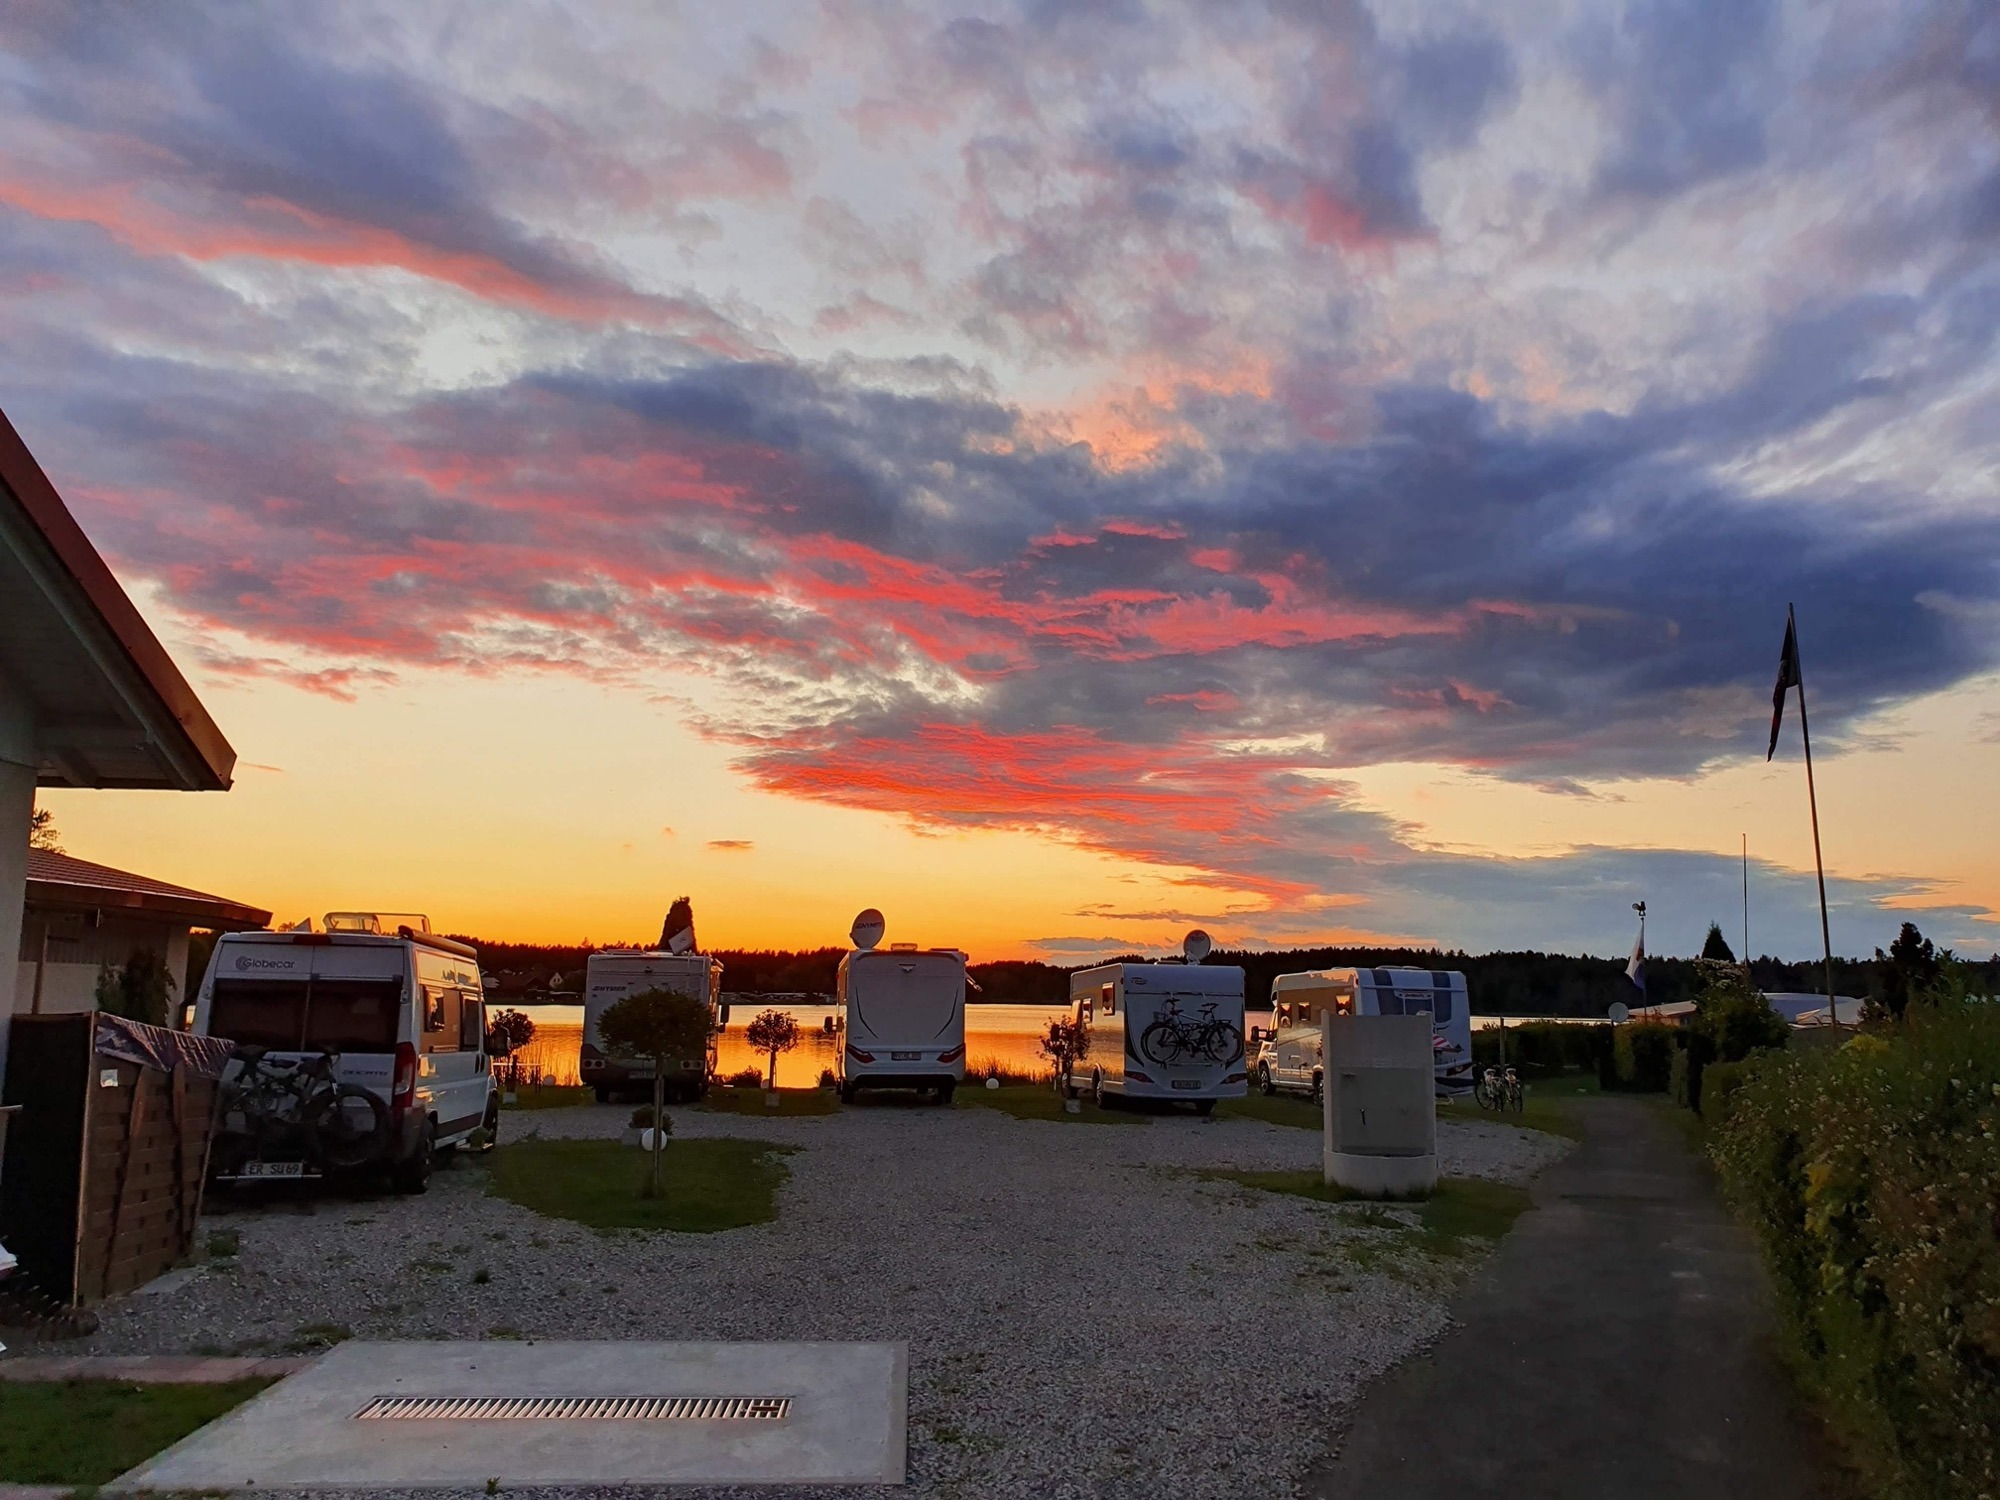 Campingplatz bei Sonnenuntergang - Wohnmobilhafen Sunset - Camping in Bayern